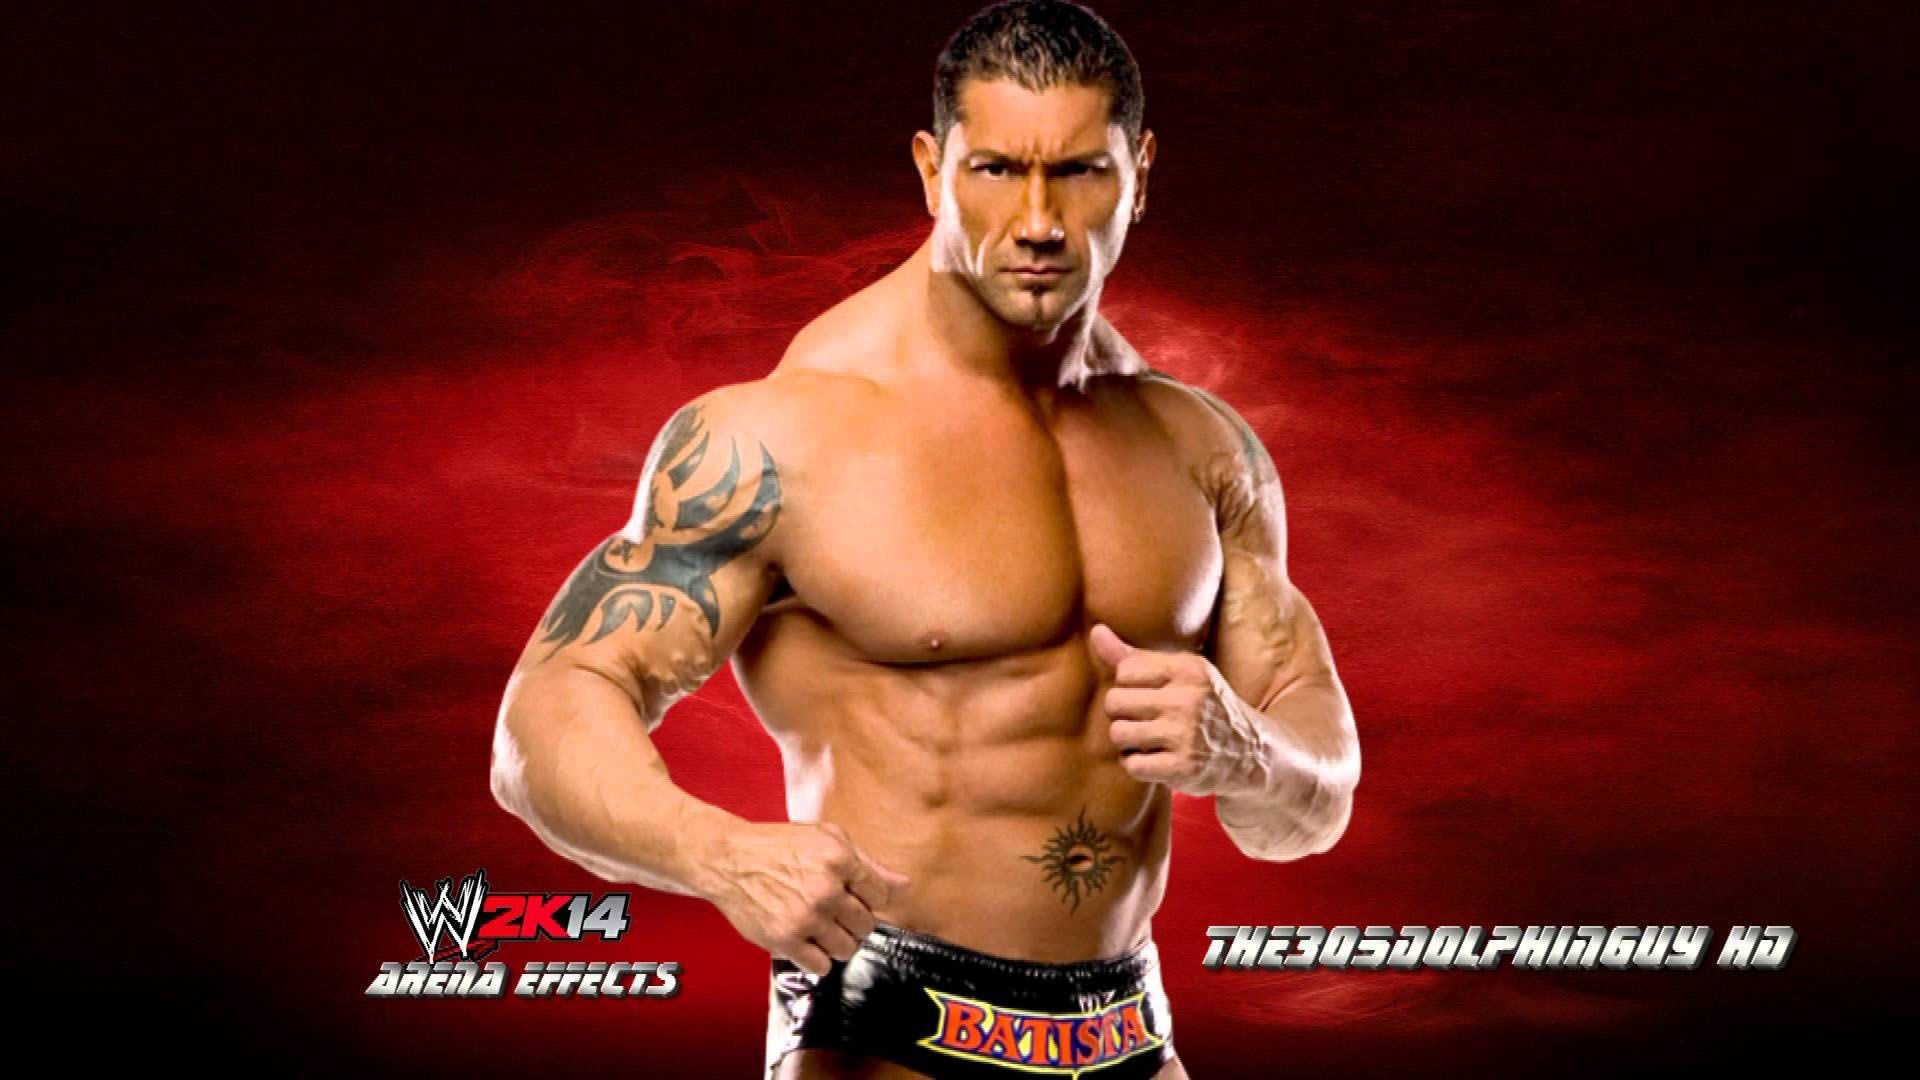 1920x1080 ... WWE Star Dave Batista HD Wallpapers - HD Wallpapers Blog ...